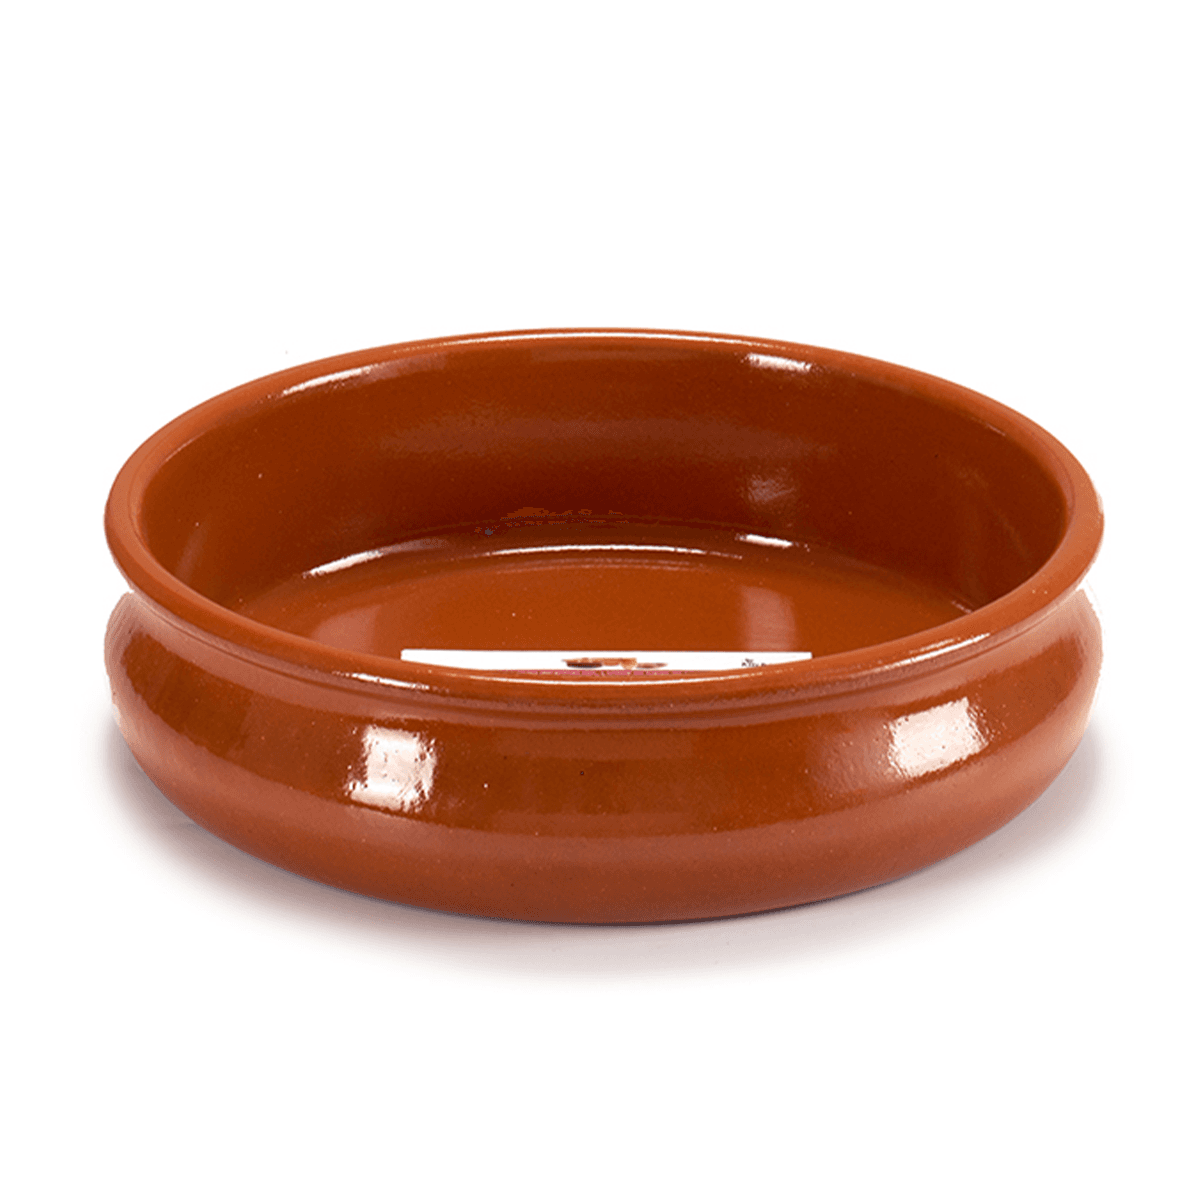 صحن شوربة فخار عميق 24 سم صناعة اسبانيا بني آرت ريجال Arte Regal Brown Clay Belly Cooking Bowl